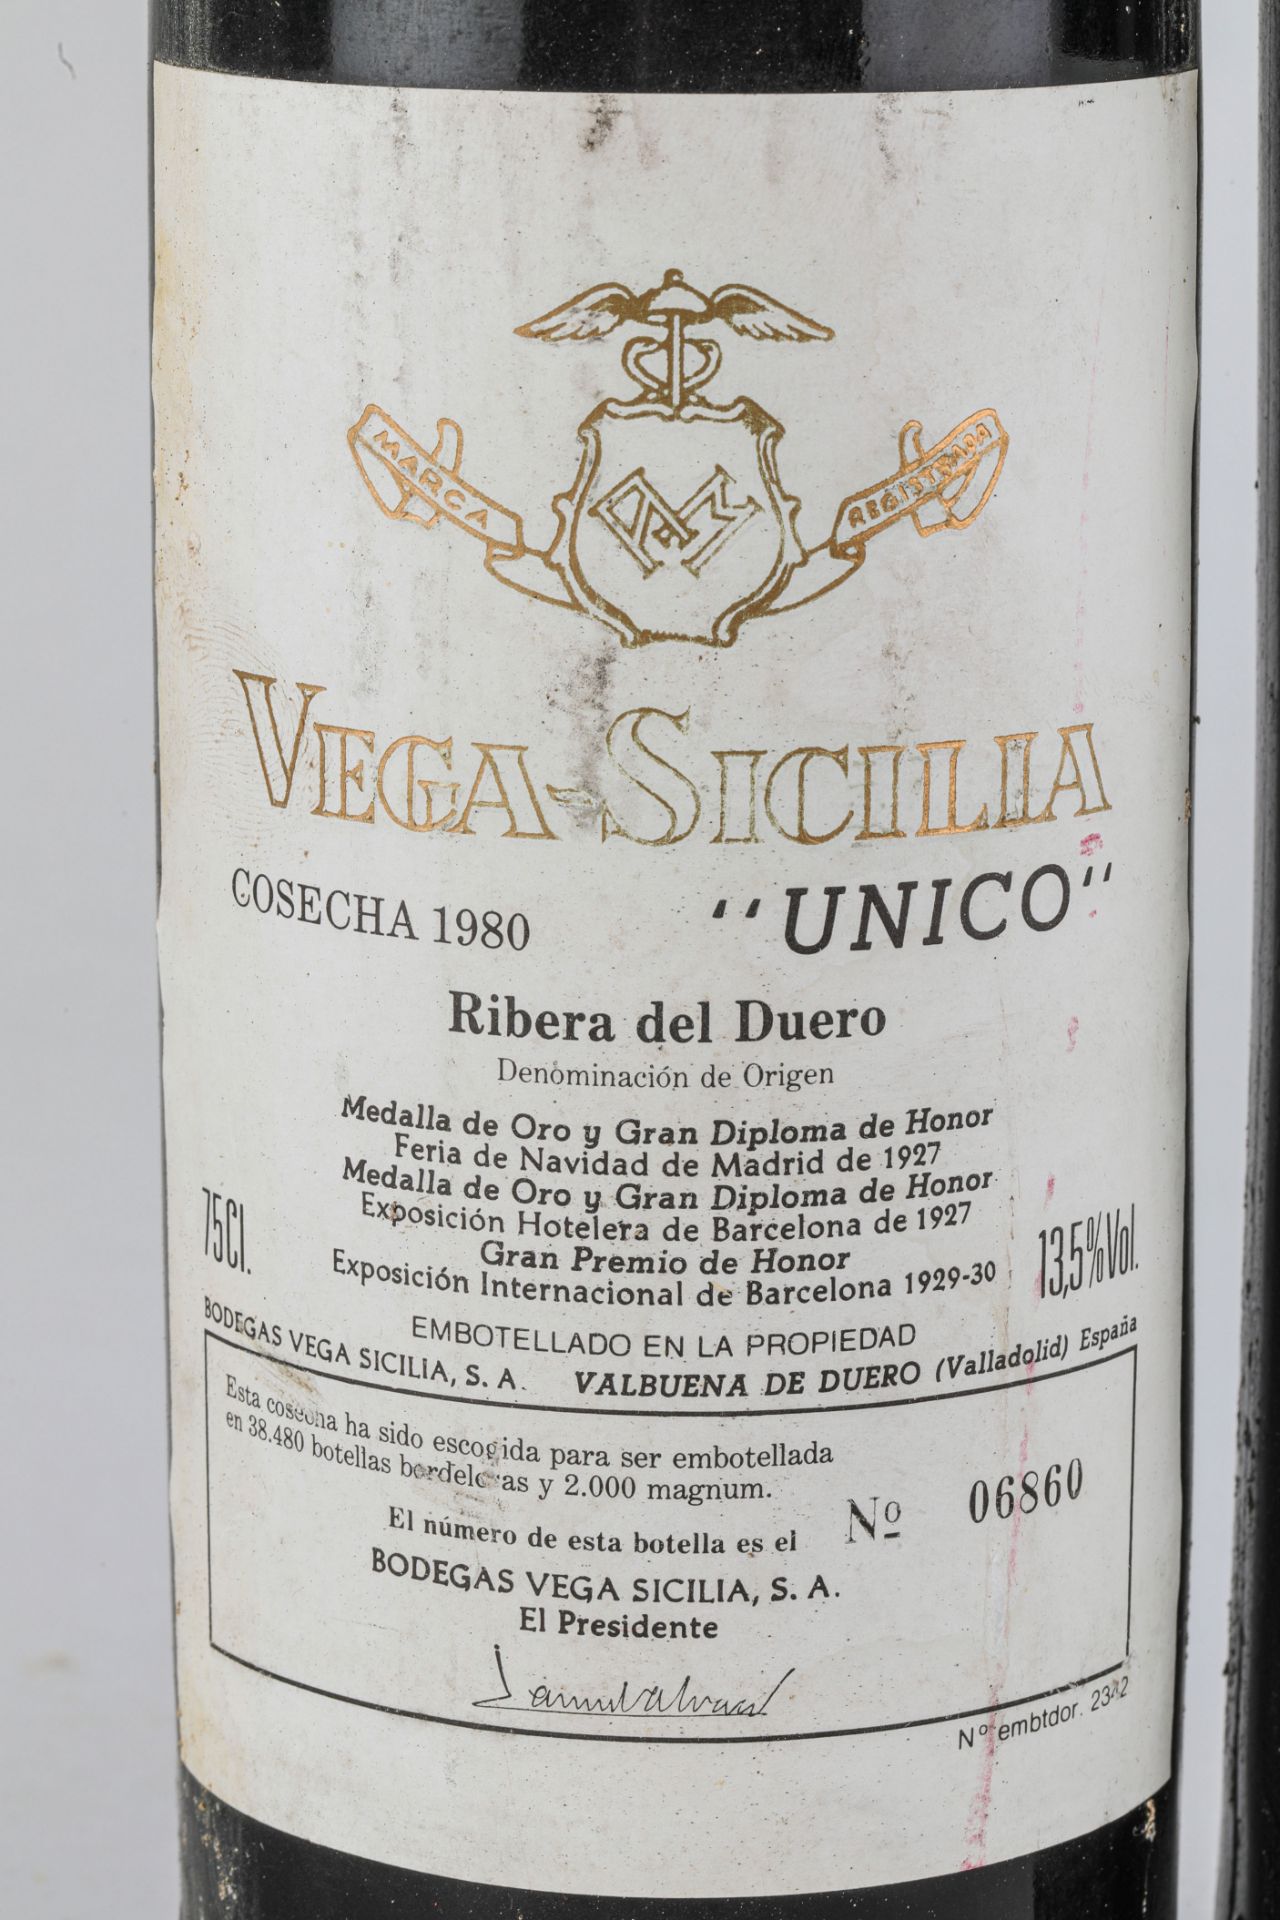 VEGA SICILIA UNICO. 1980. 2 bouteilles. Ribera del Duero. N°06860 et N°06864 sur production 38 480 - Image 3 of 6